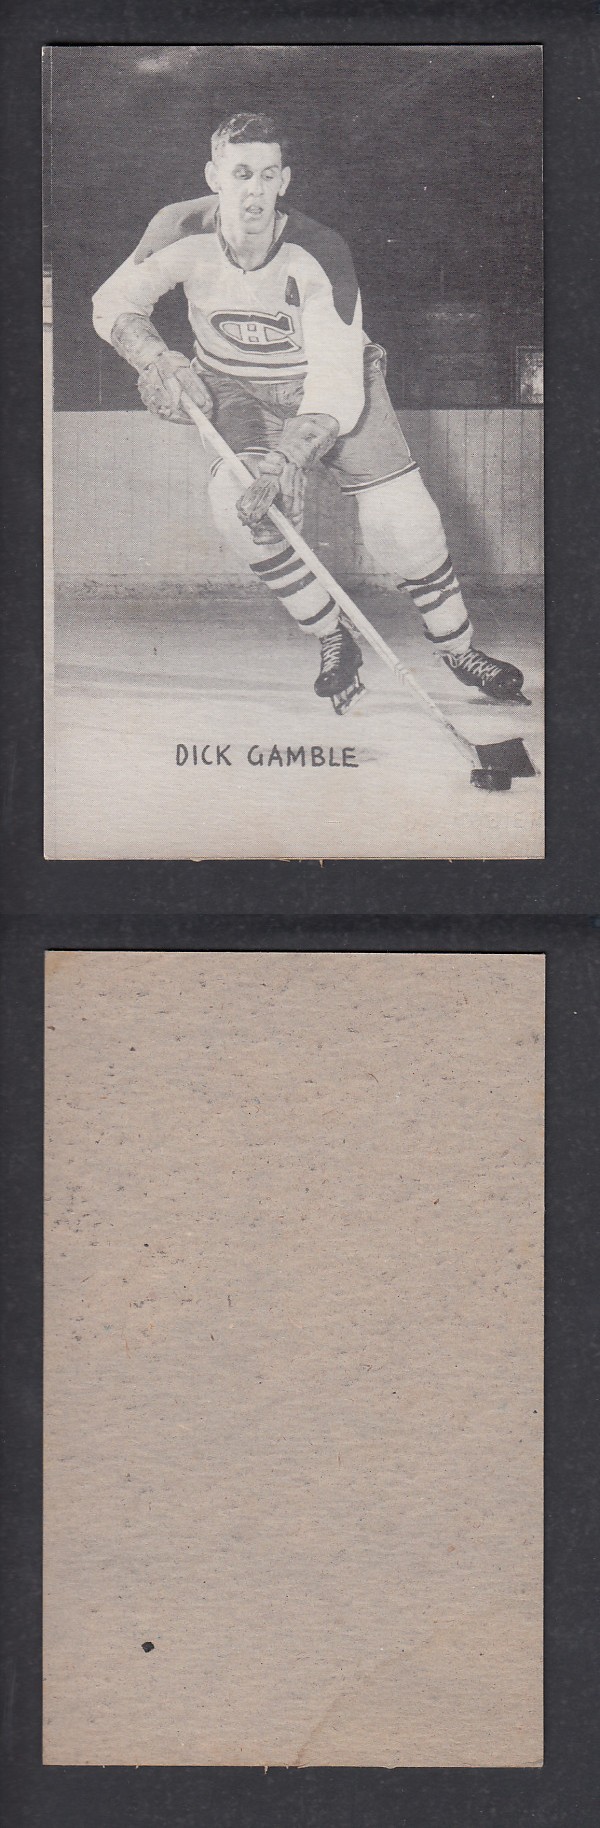 1948-52 EXHIBITS HOCKEY CARD D. GAMBLE photo